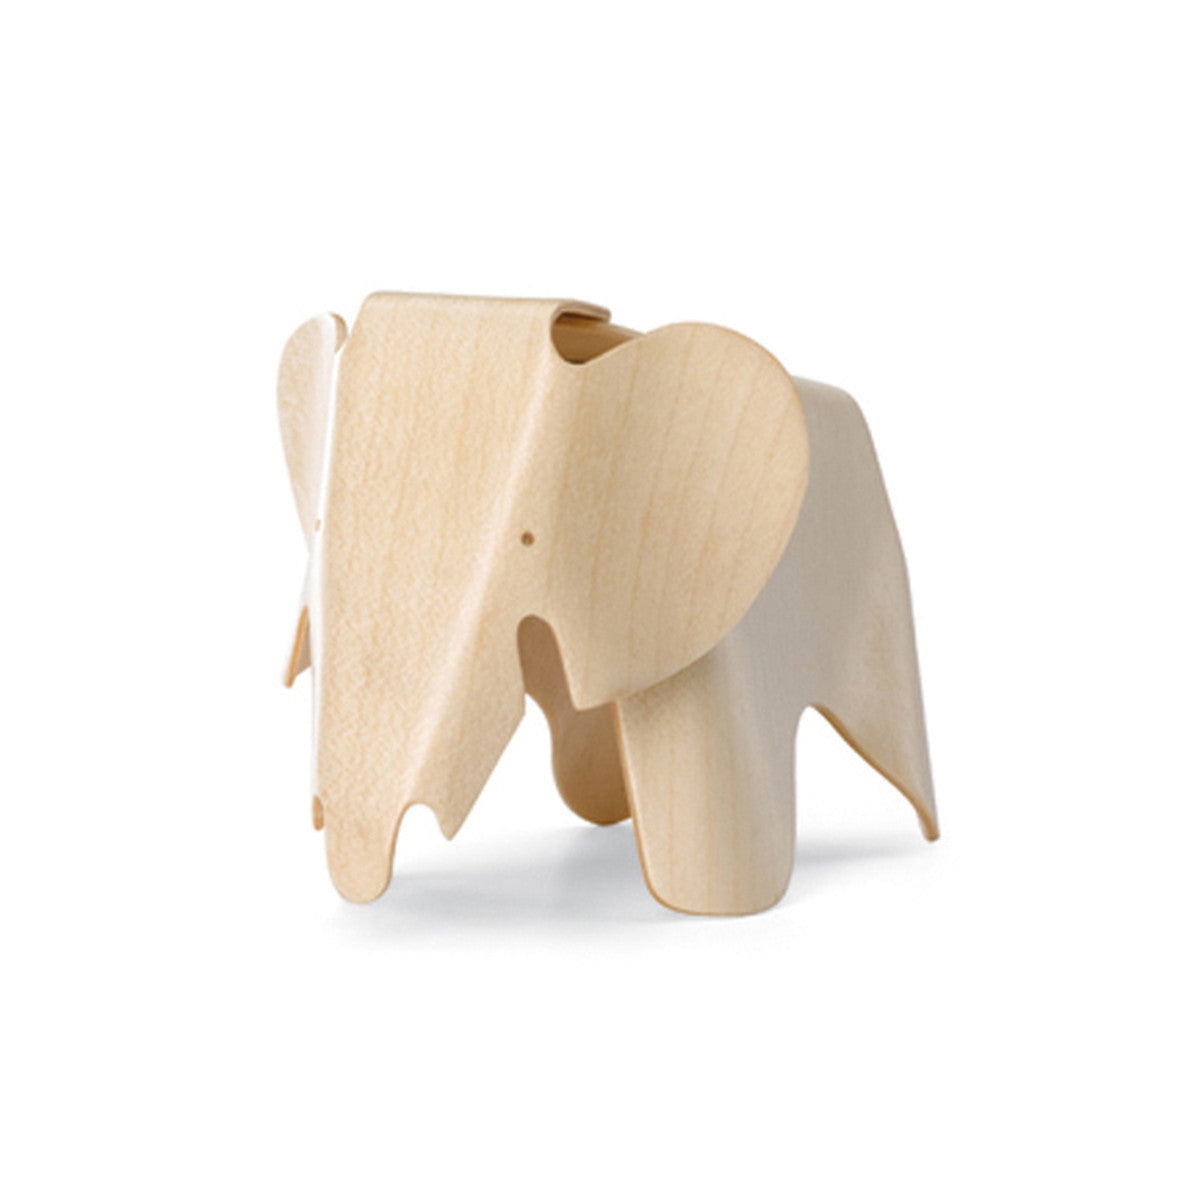 Eames elephant Miniture by Vitra